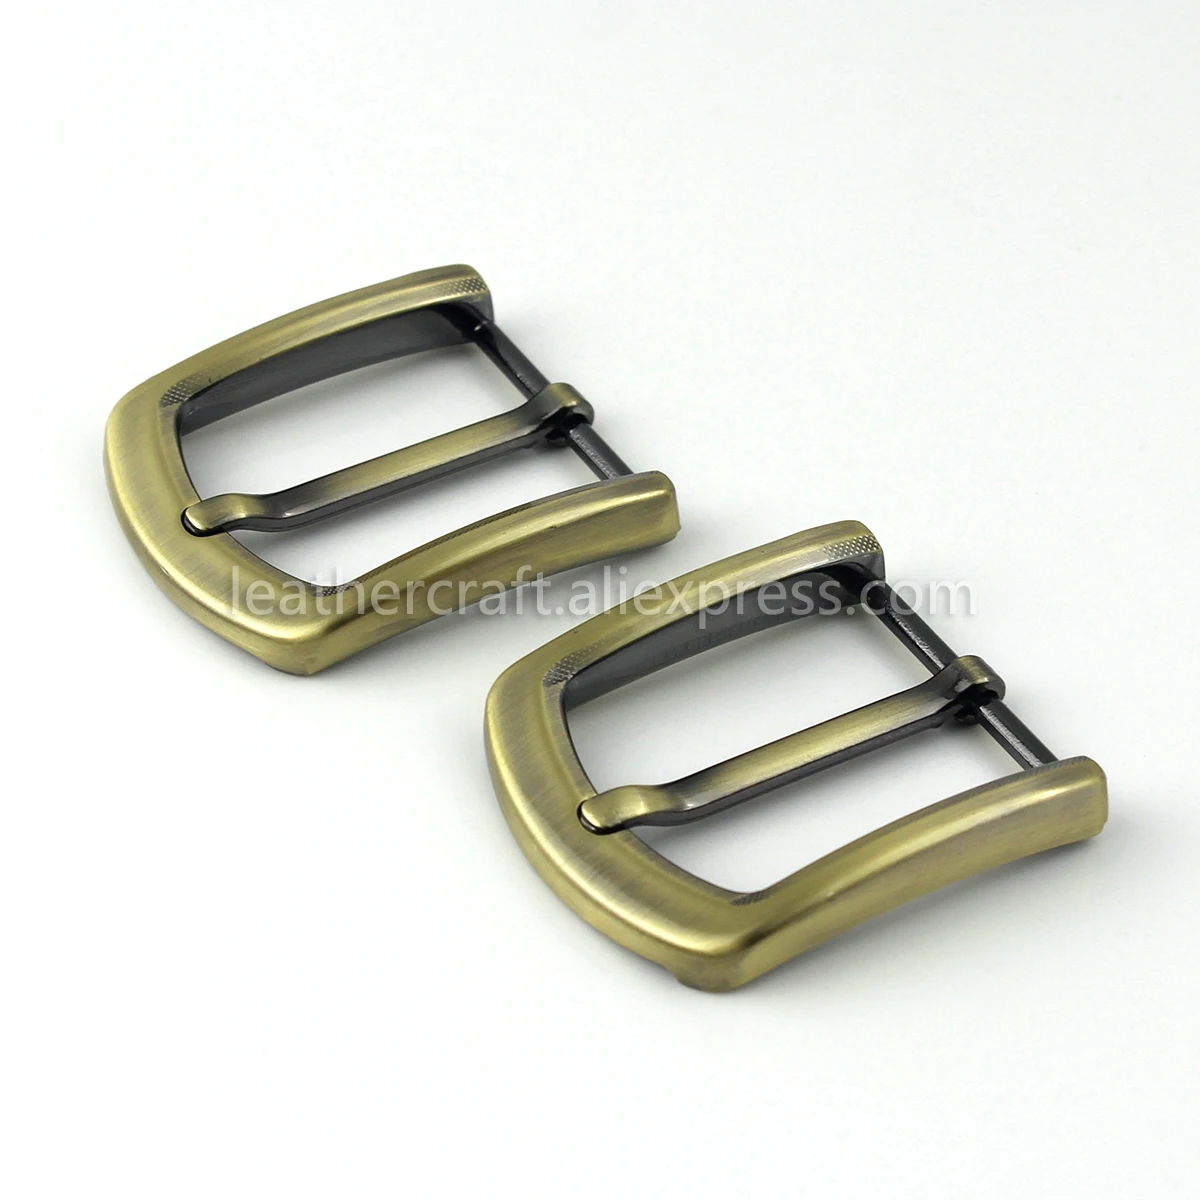 1x Metal Belt Buckle Men's Strap buckle Leather Craft Parts For 37-39mm belts 